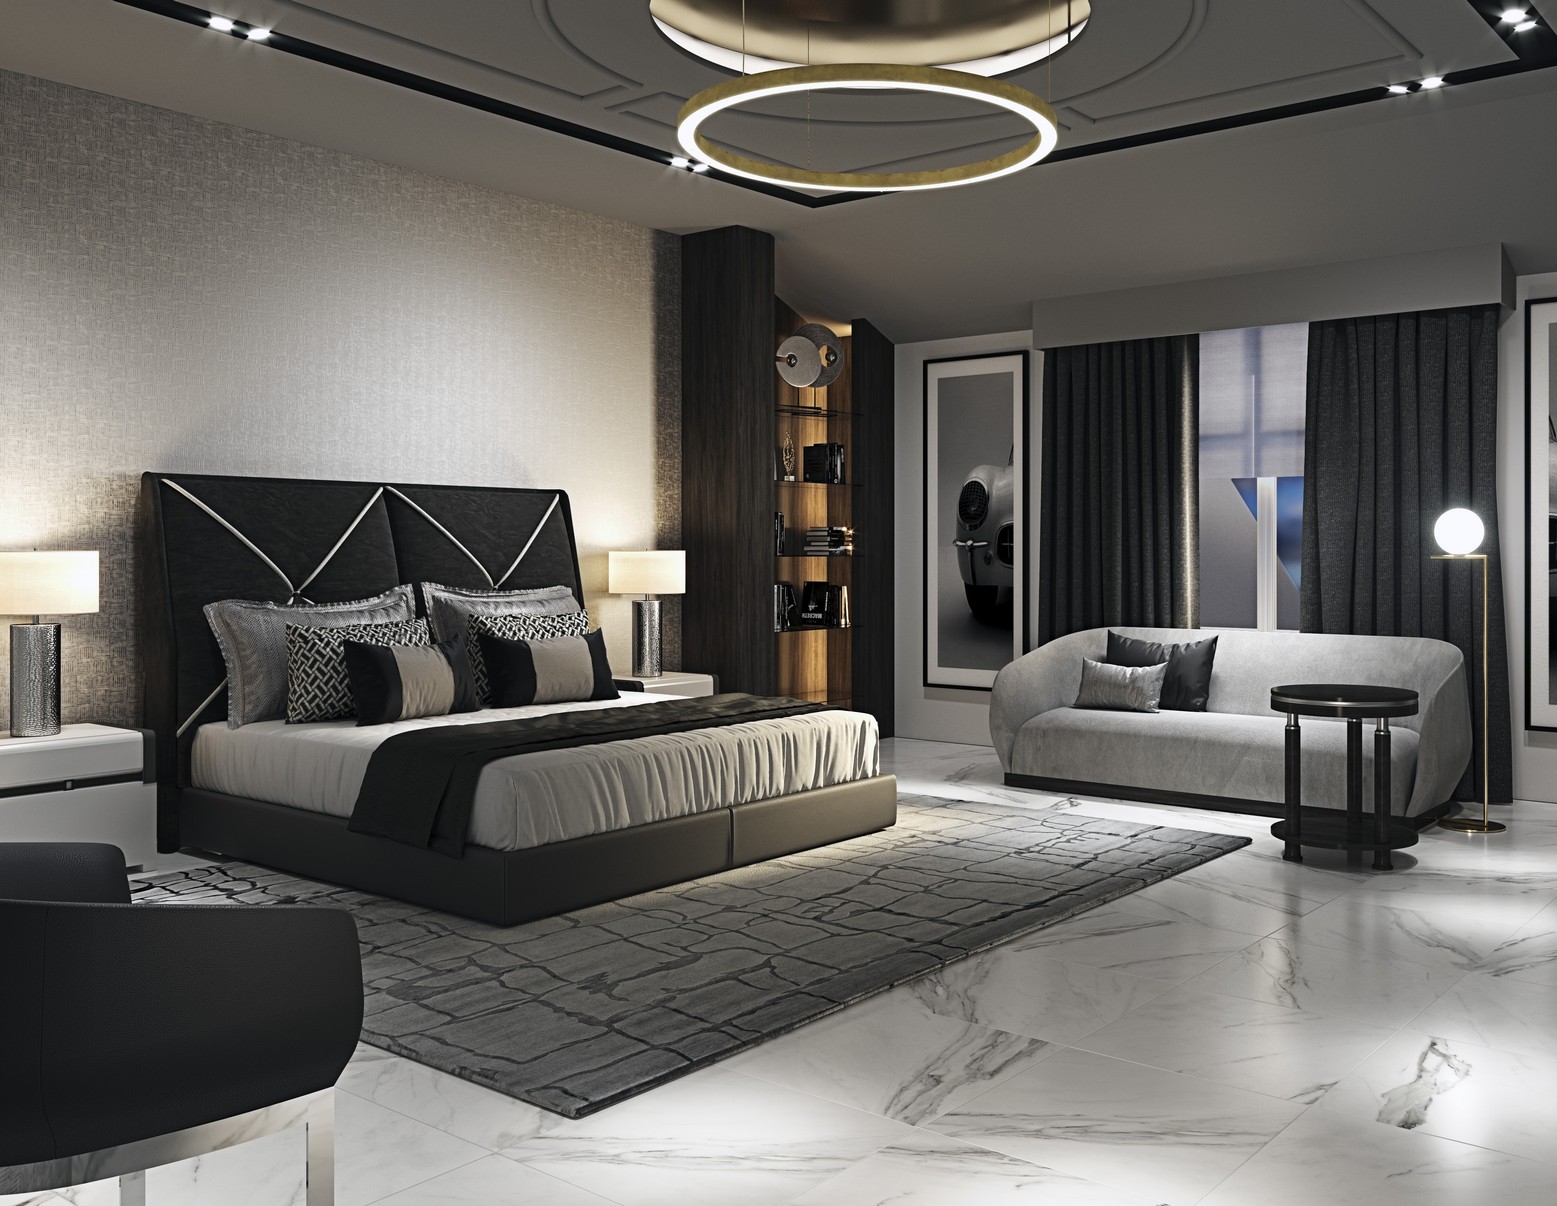 Luxury bedroom project